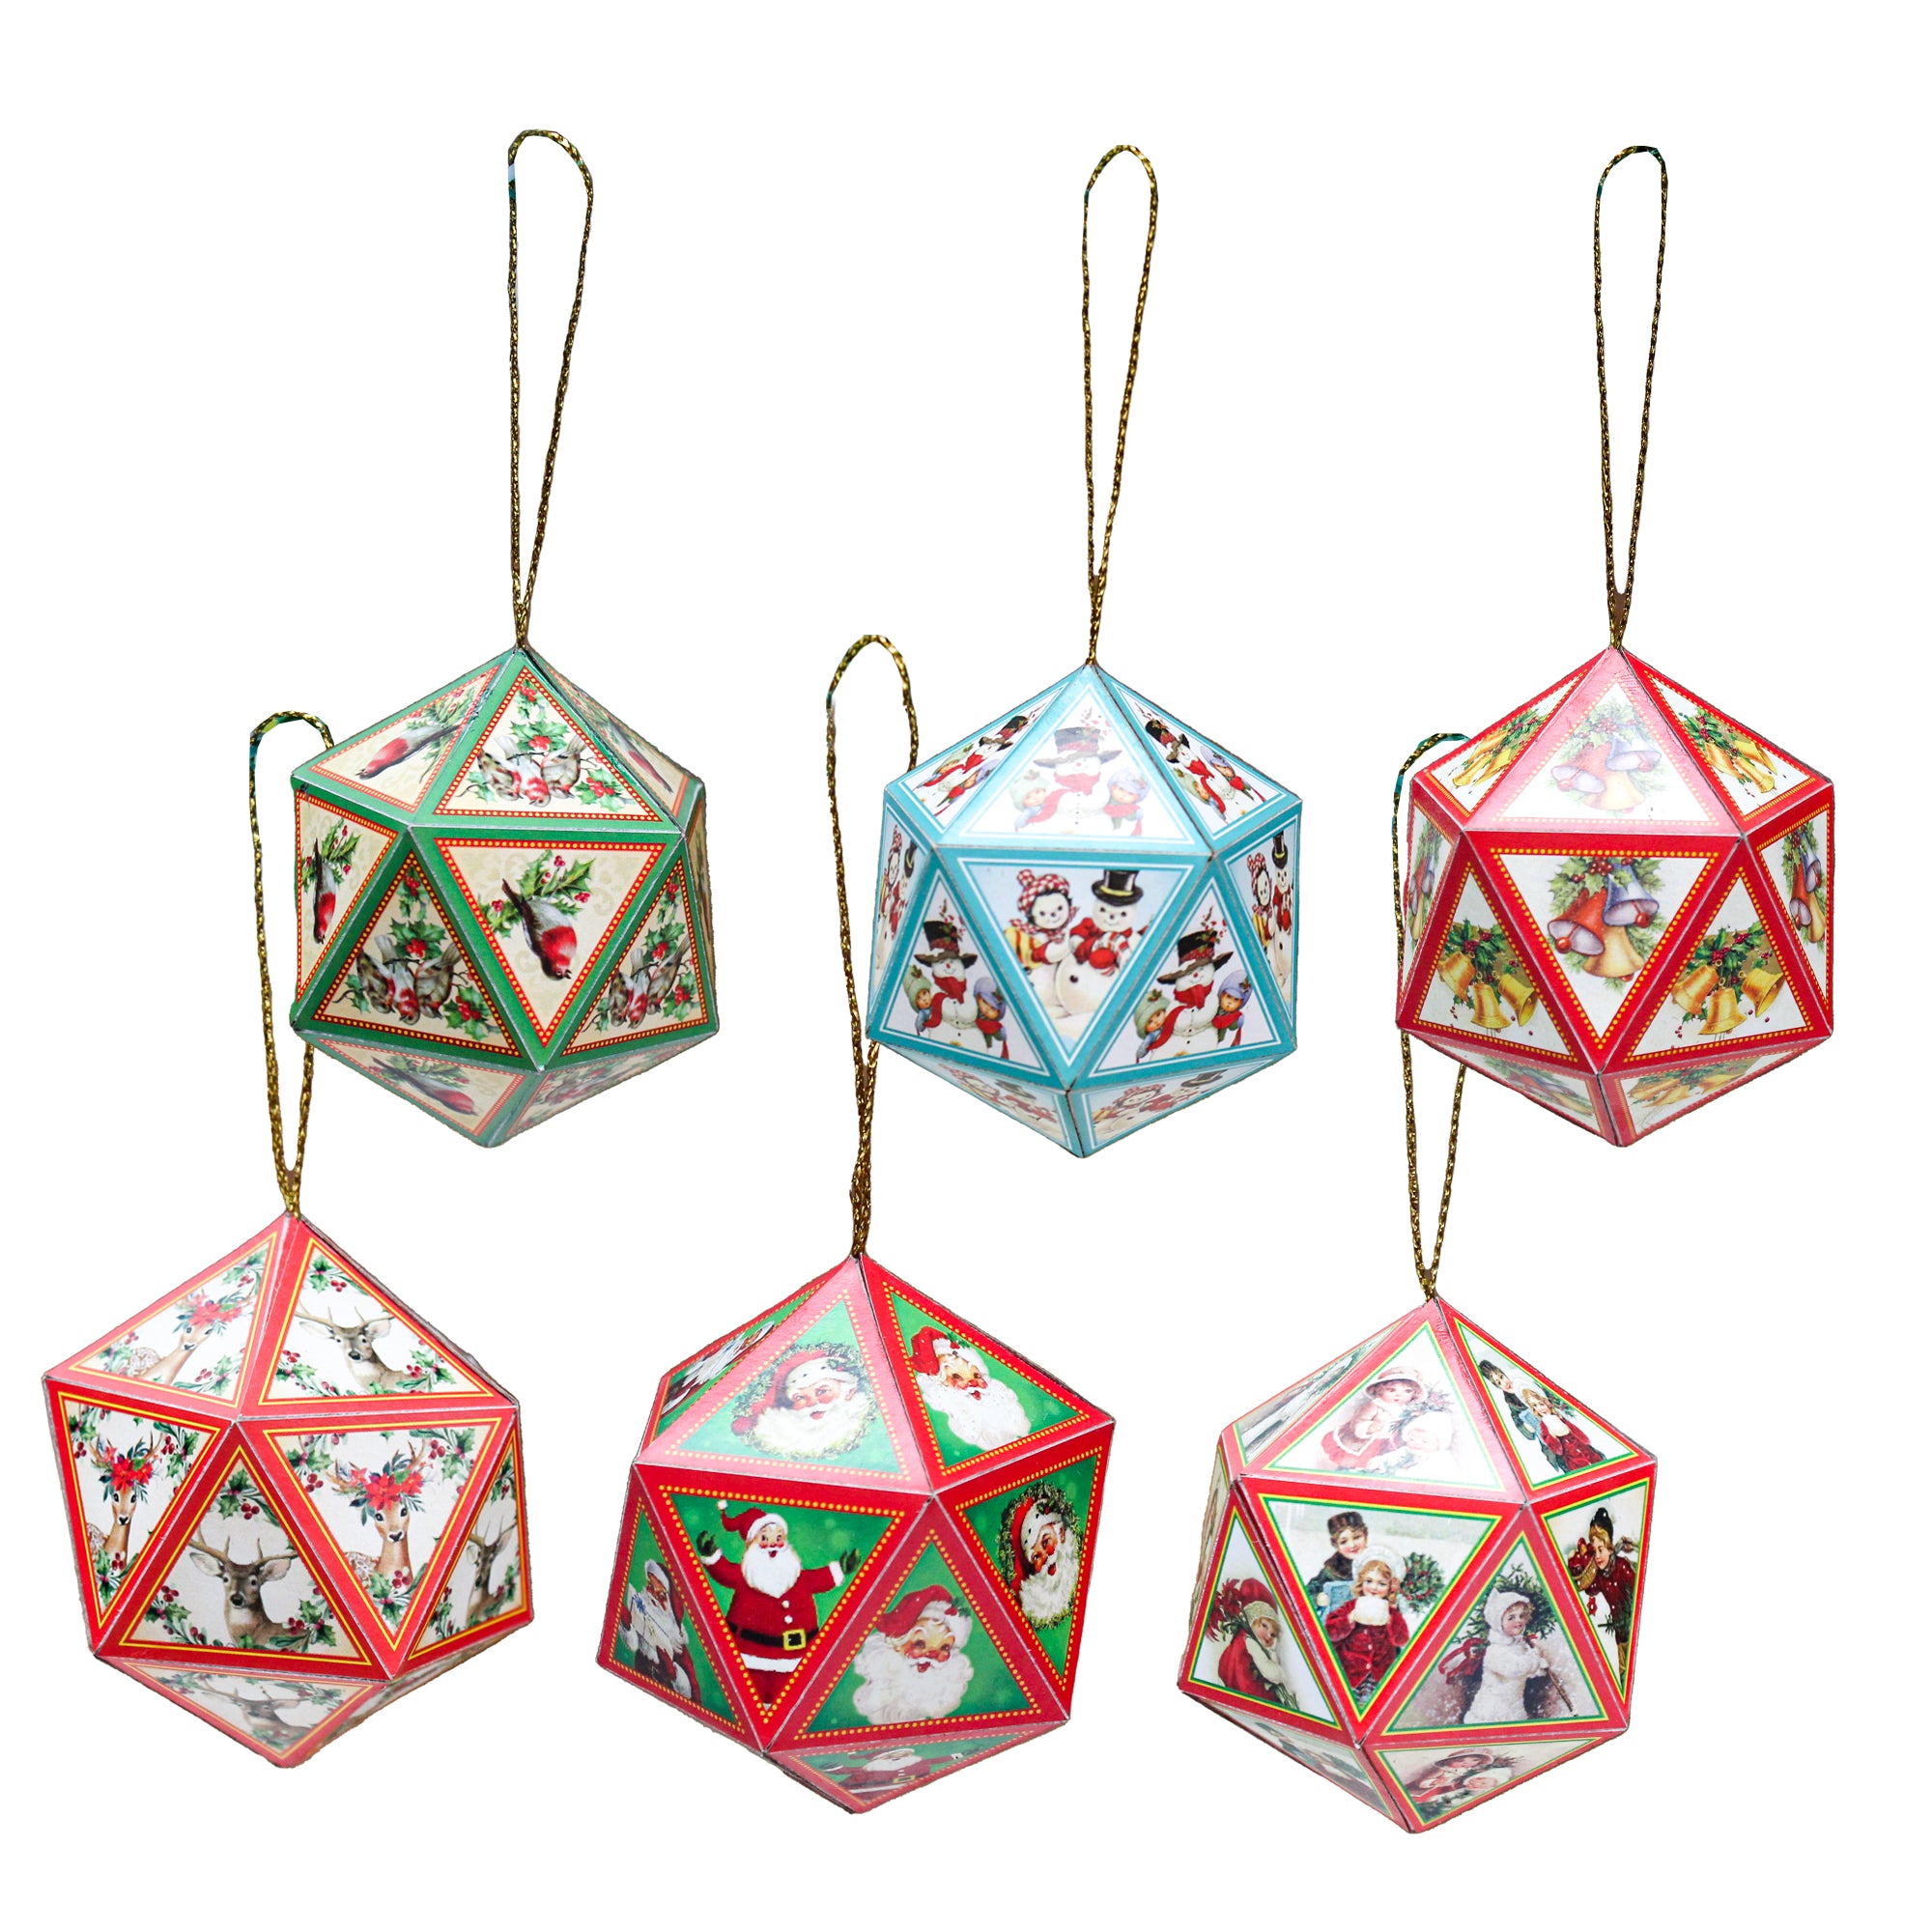 Handmade Foil Printed Christmas Ornaments -Trapezoid 60mm, Hexagonal Ball, 6pc